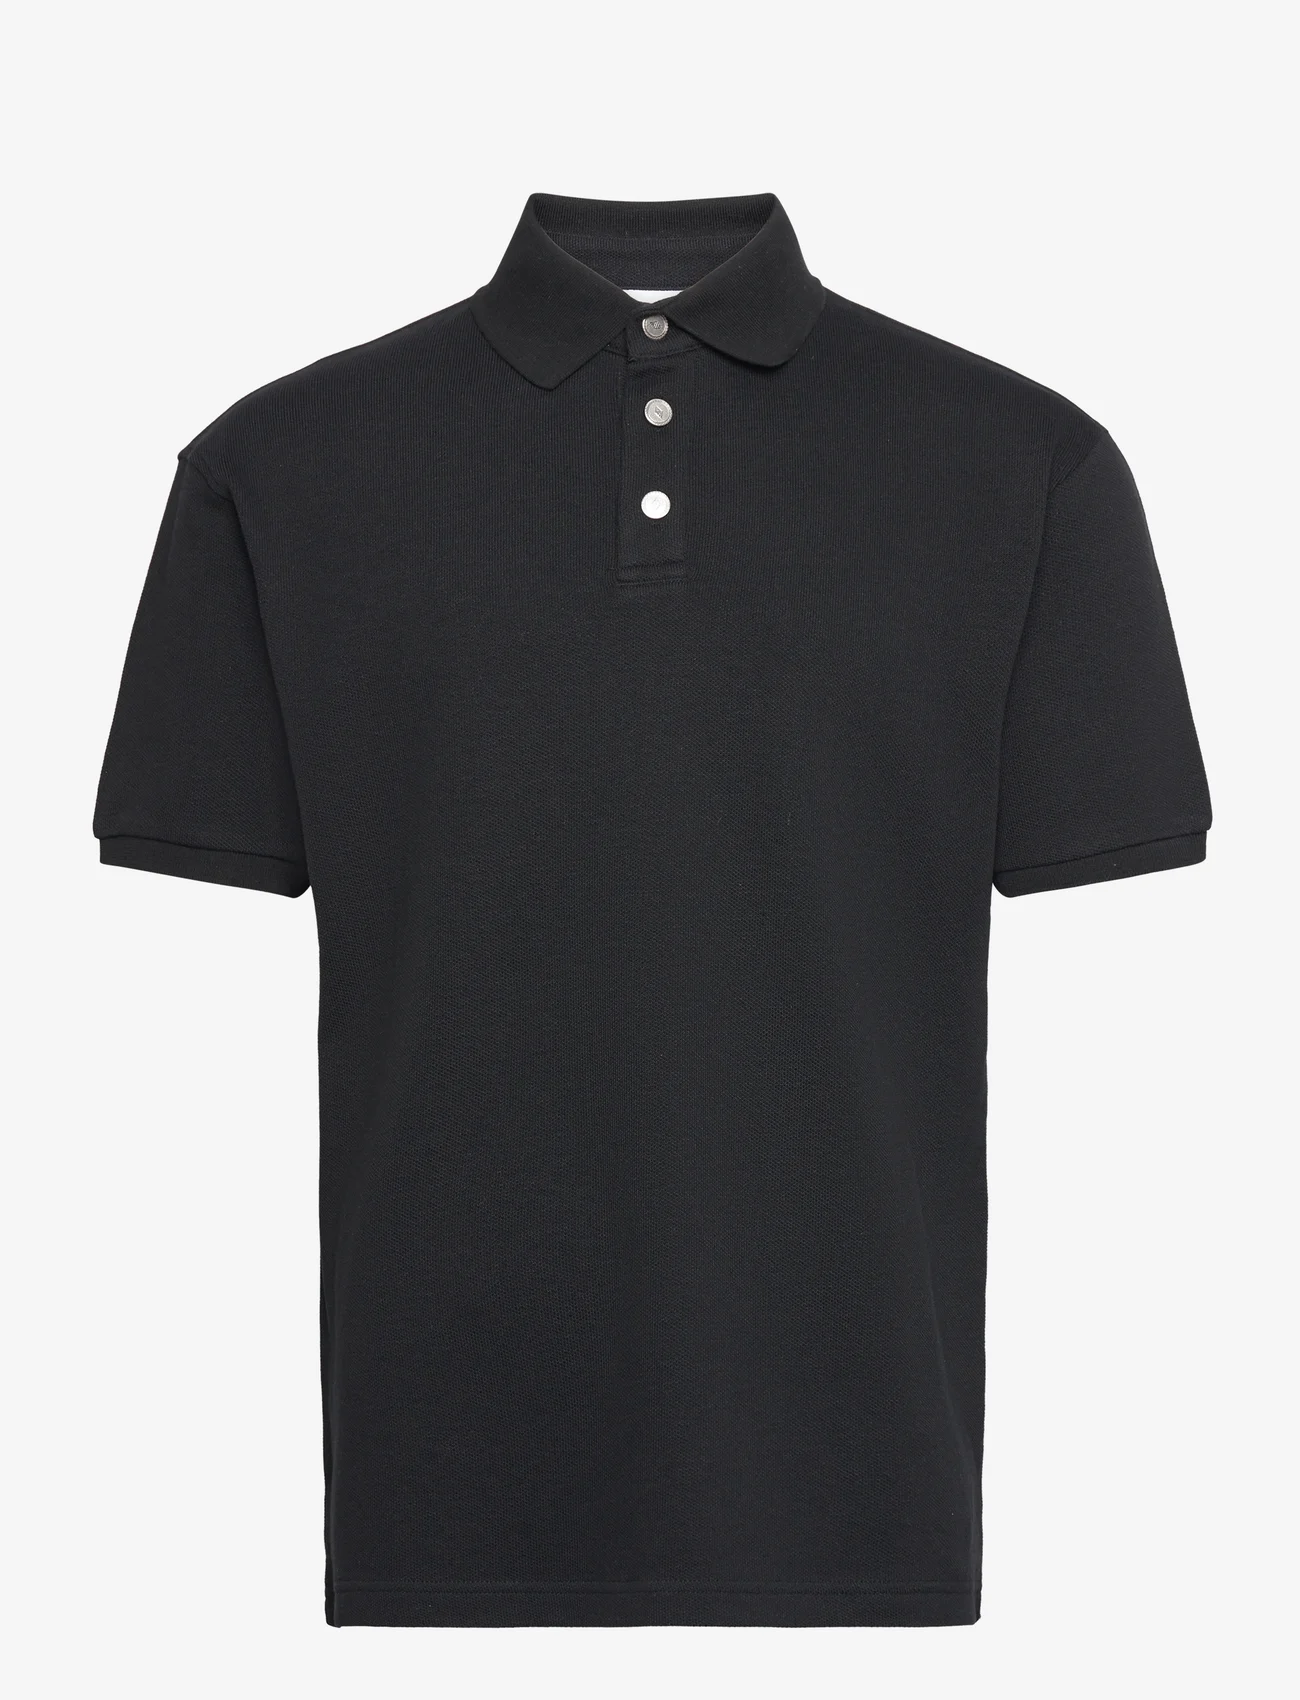 HAN Kjøbenhavn - Pique Polo Shirt - kurzärmelig - black - 0